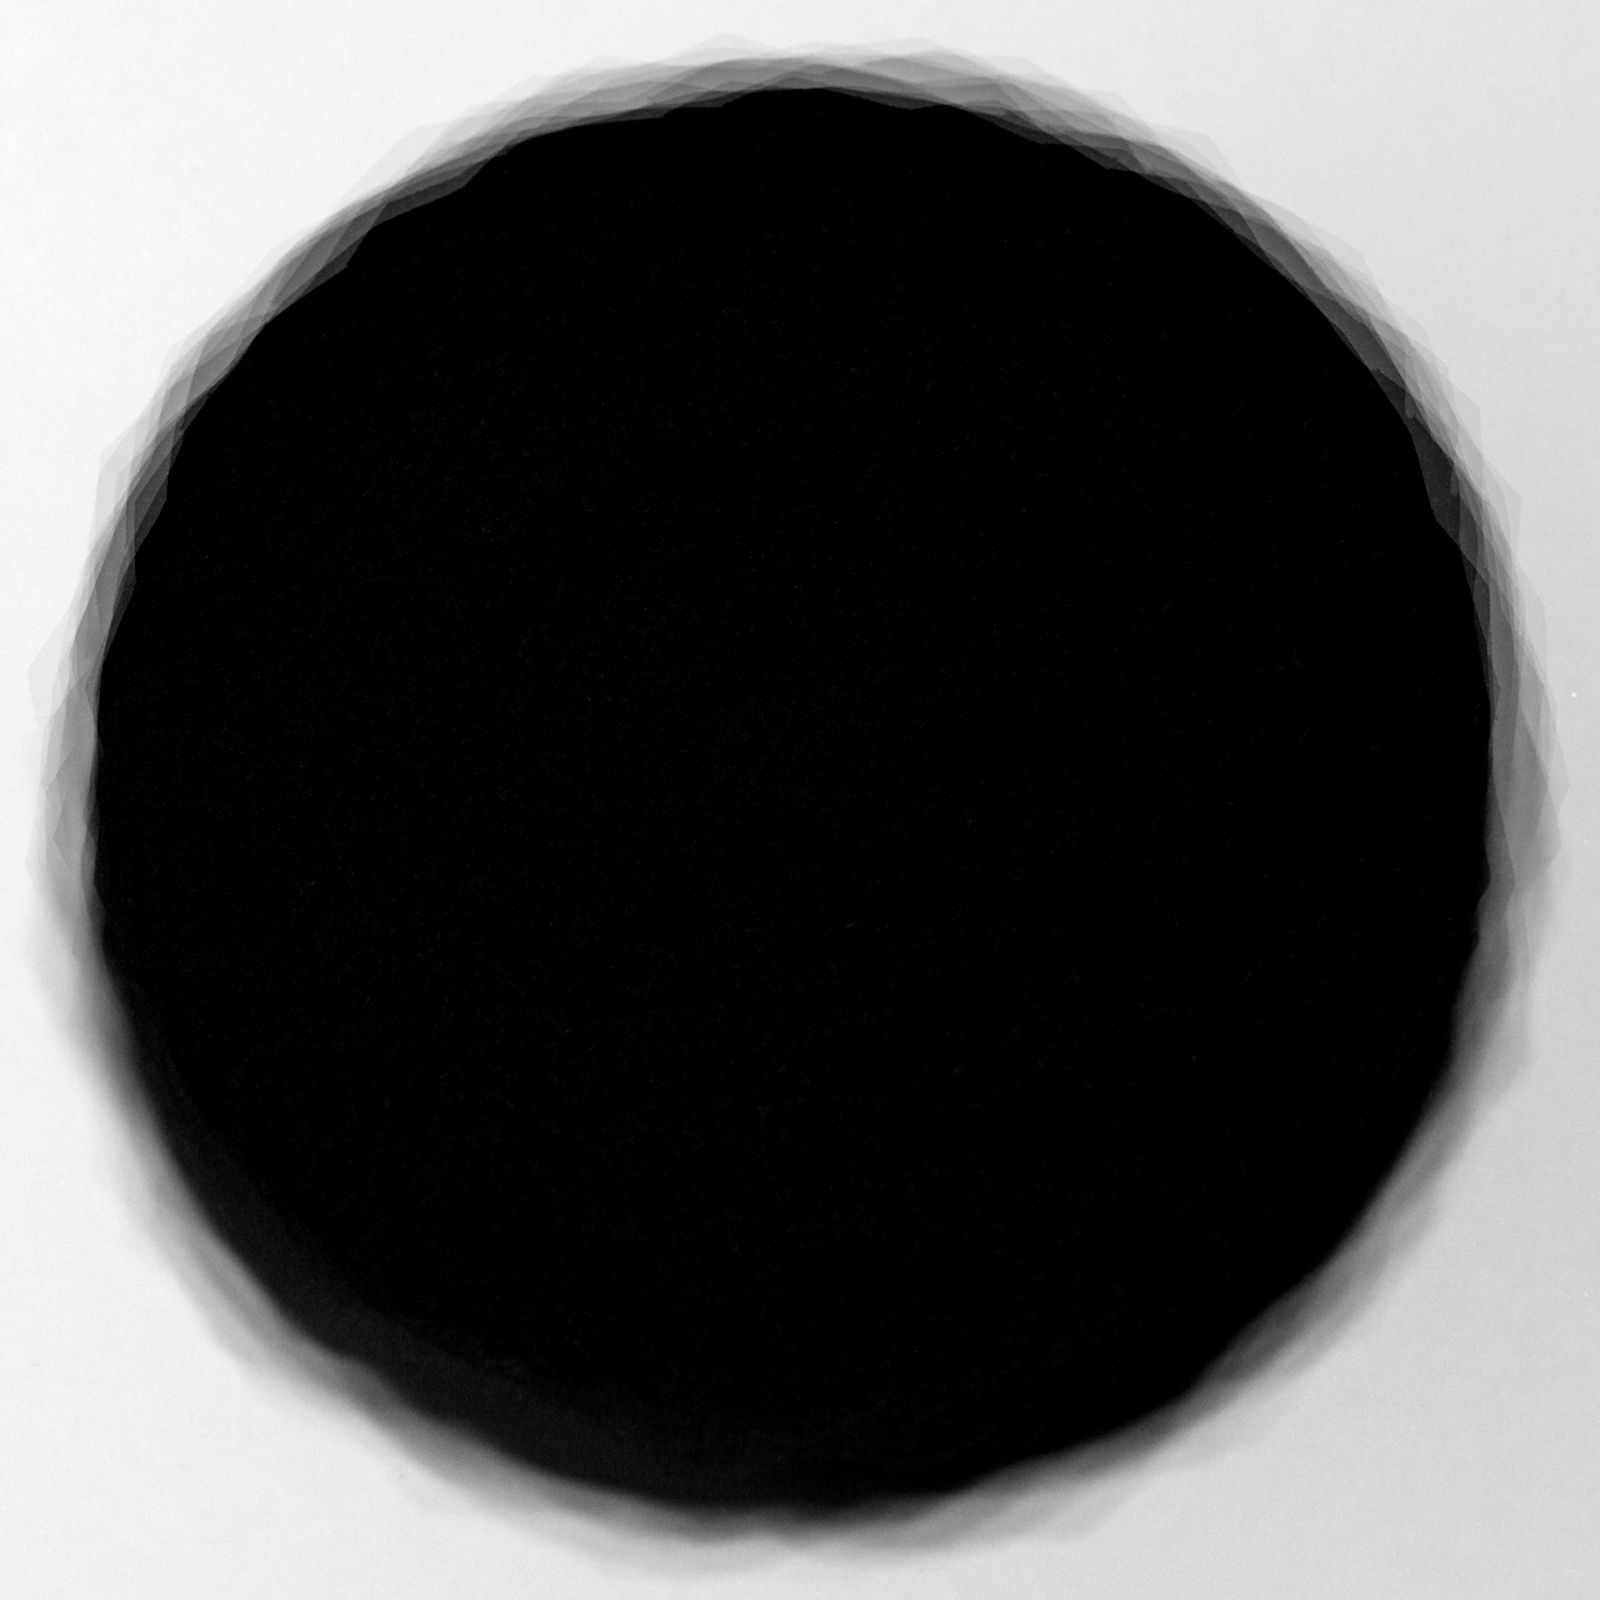 © Fernando Marante - Black hole red hole: black